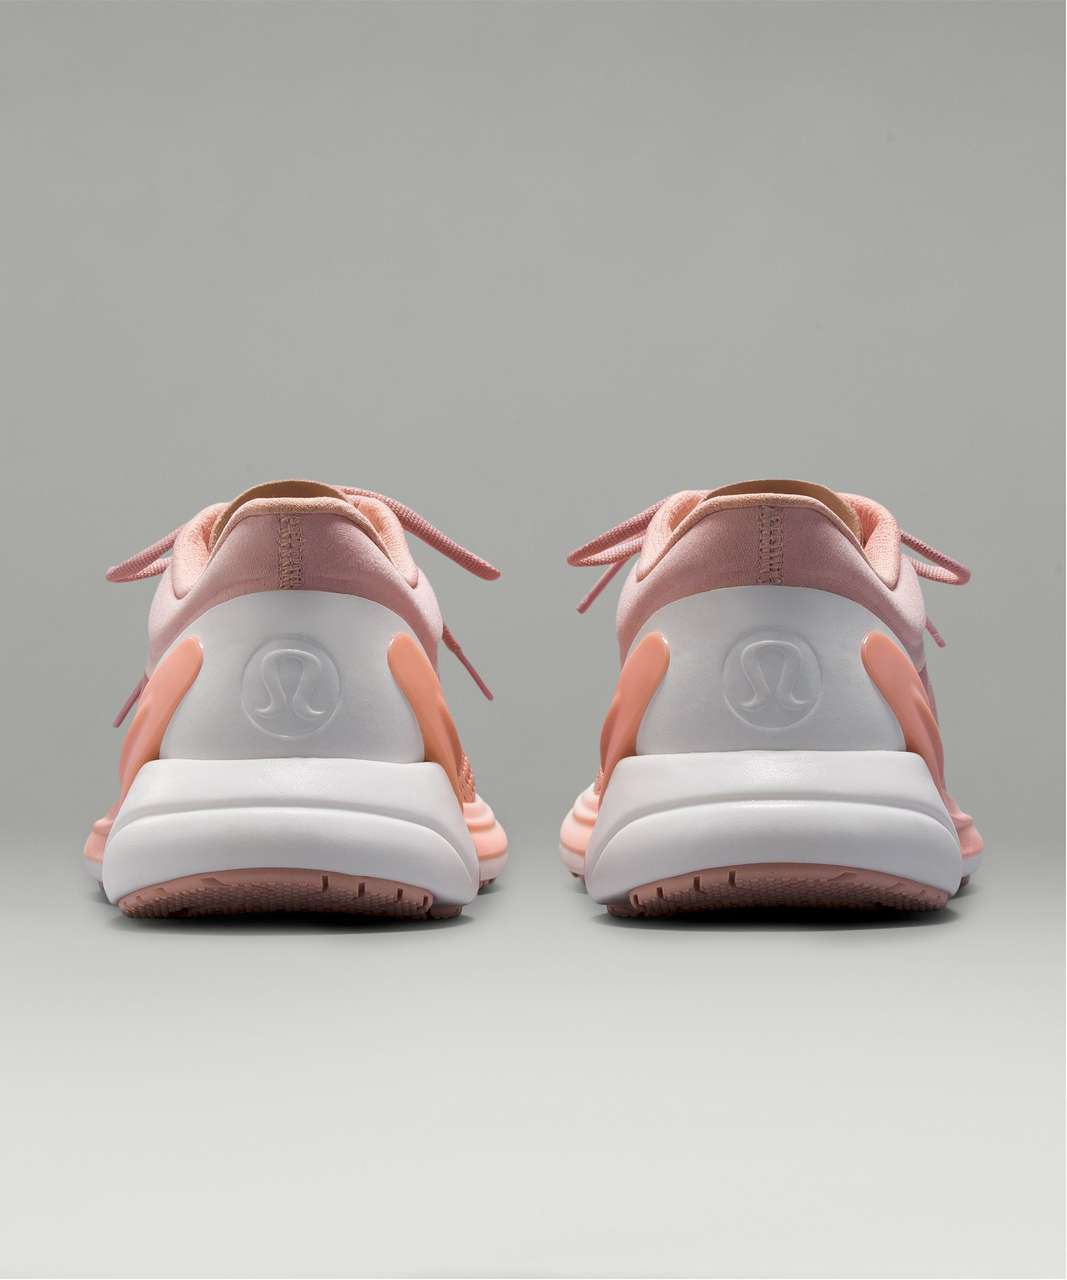 Lululemon Blissfeel Womens Running Shoe - Mink Berry / Pink Parfait / Light Vapor